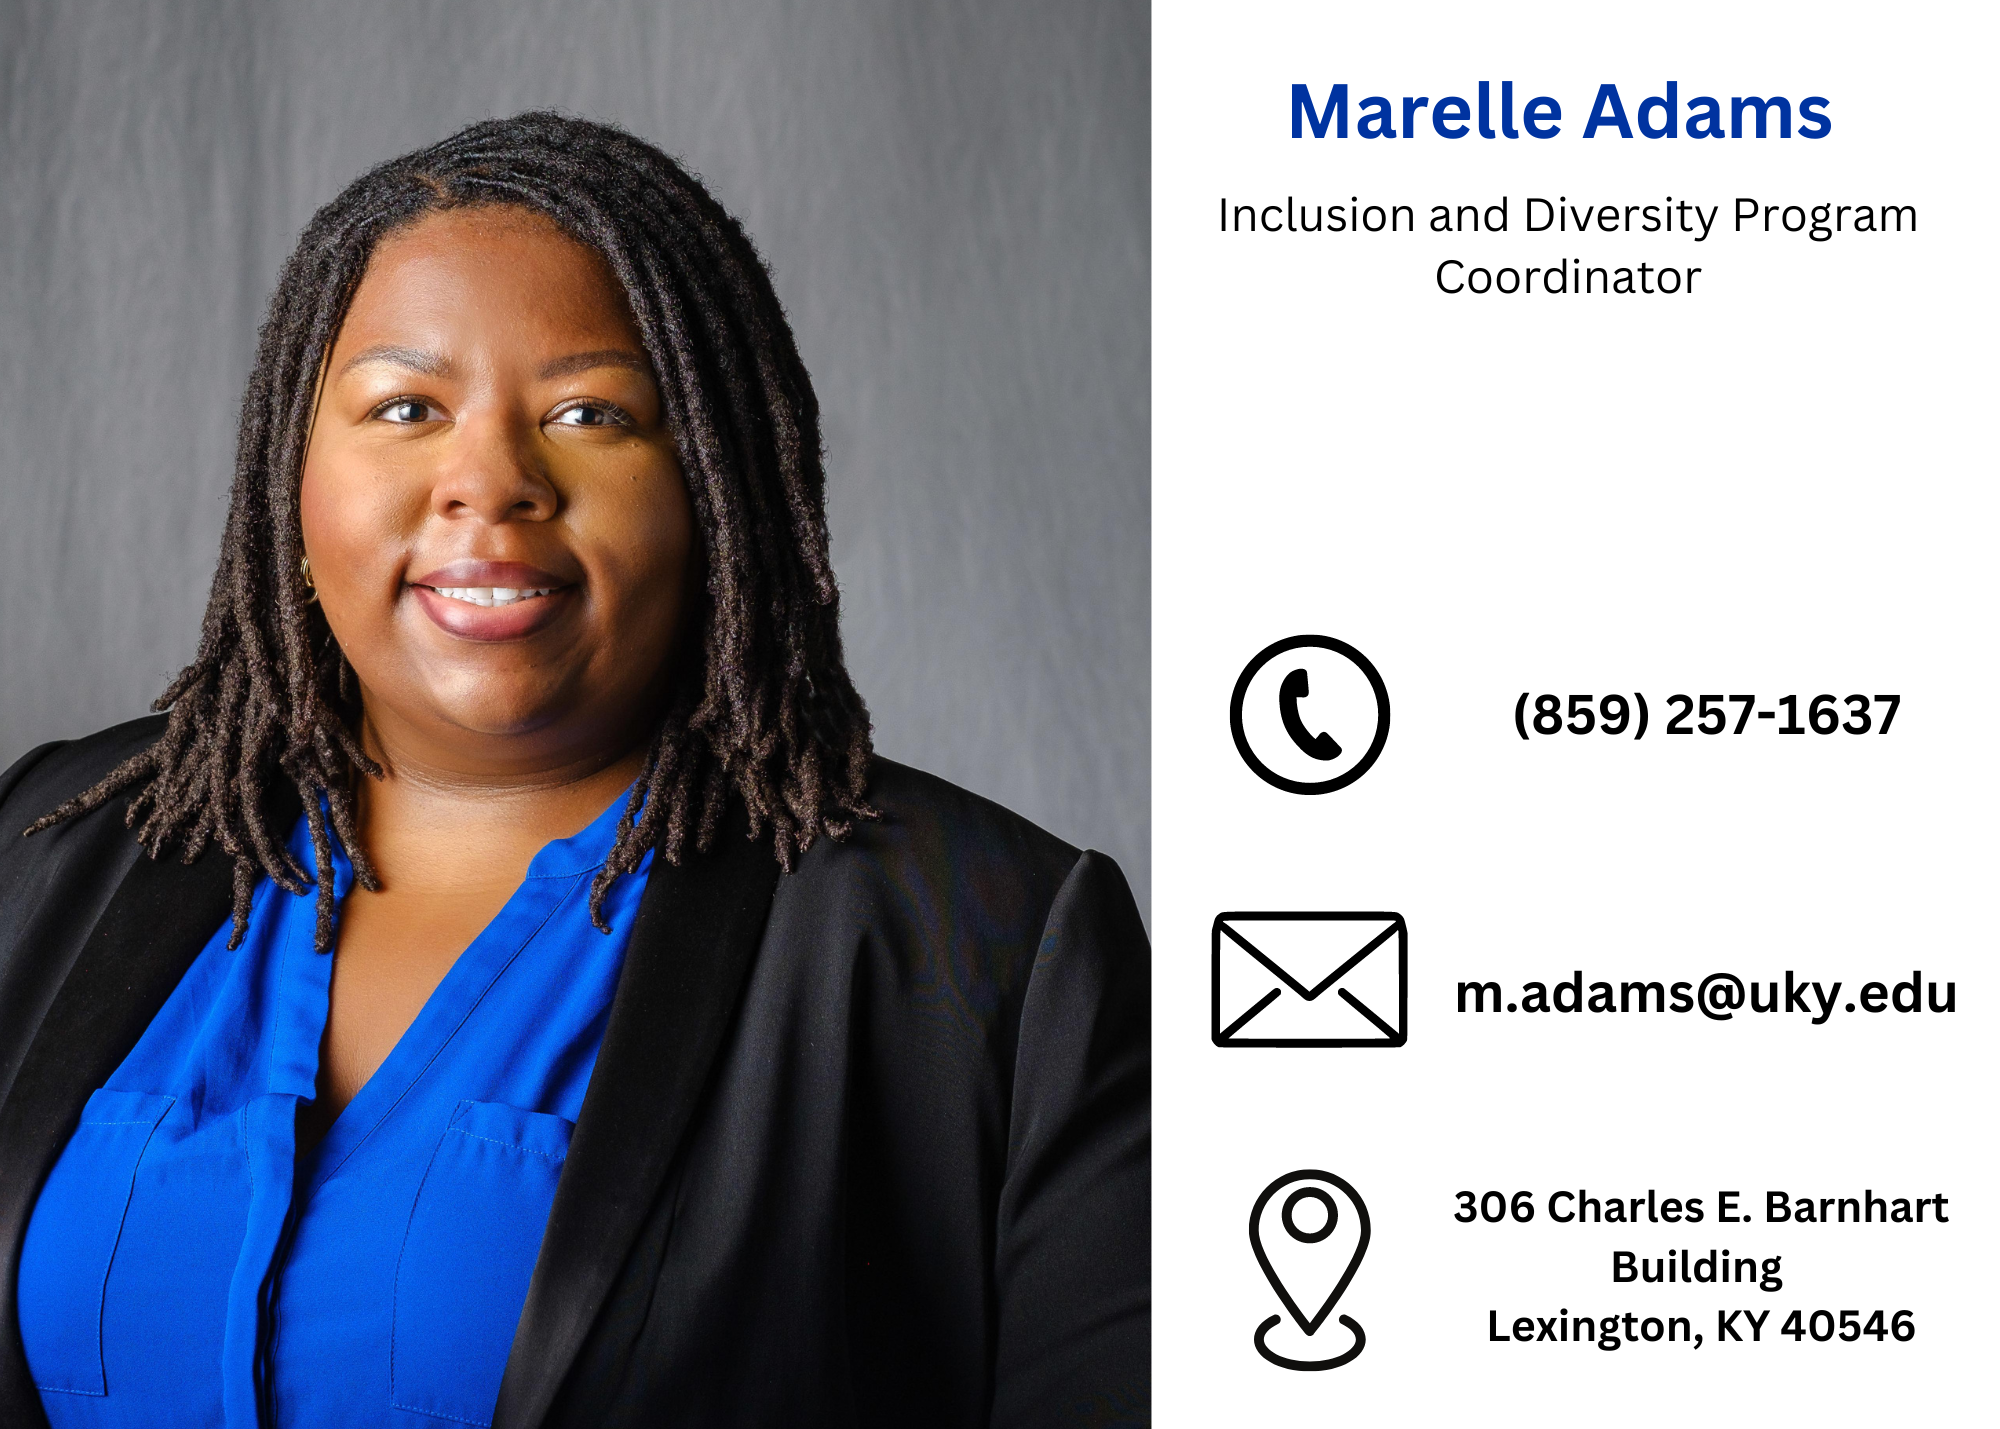 meet the team - Marelle Adams - Program Coordinator 